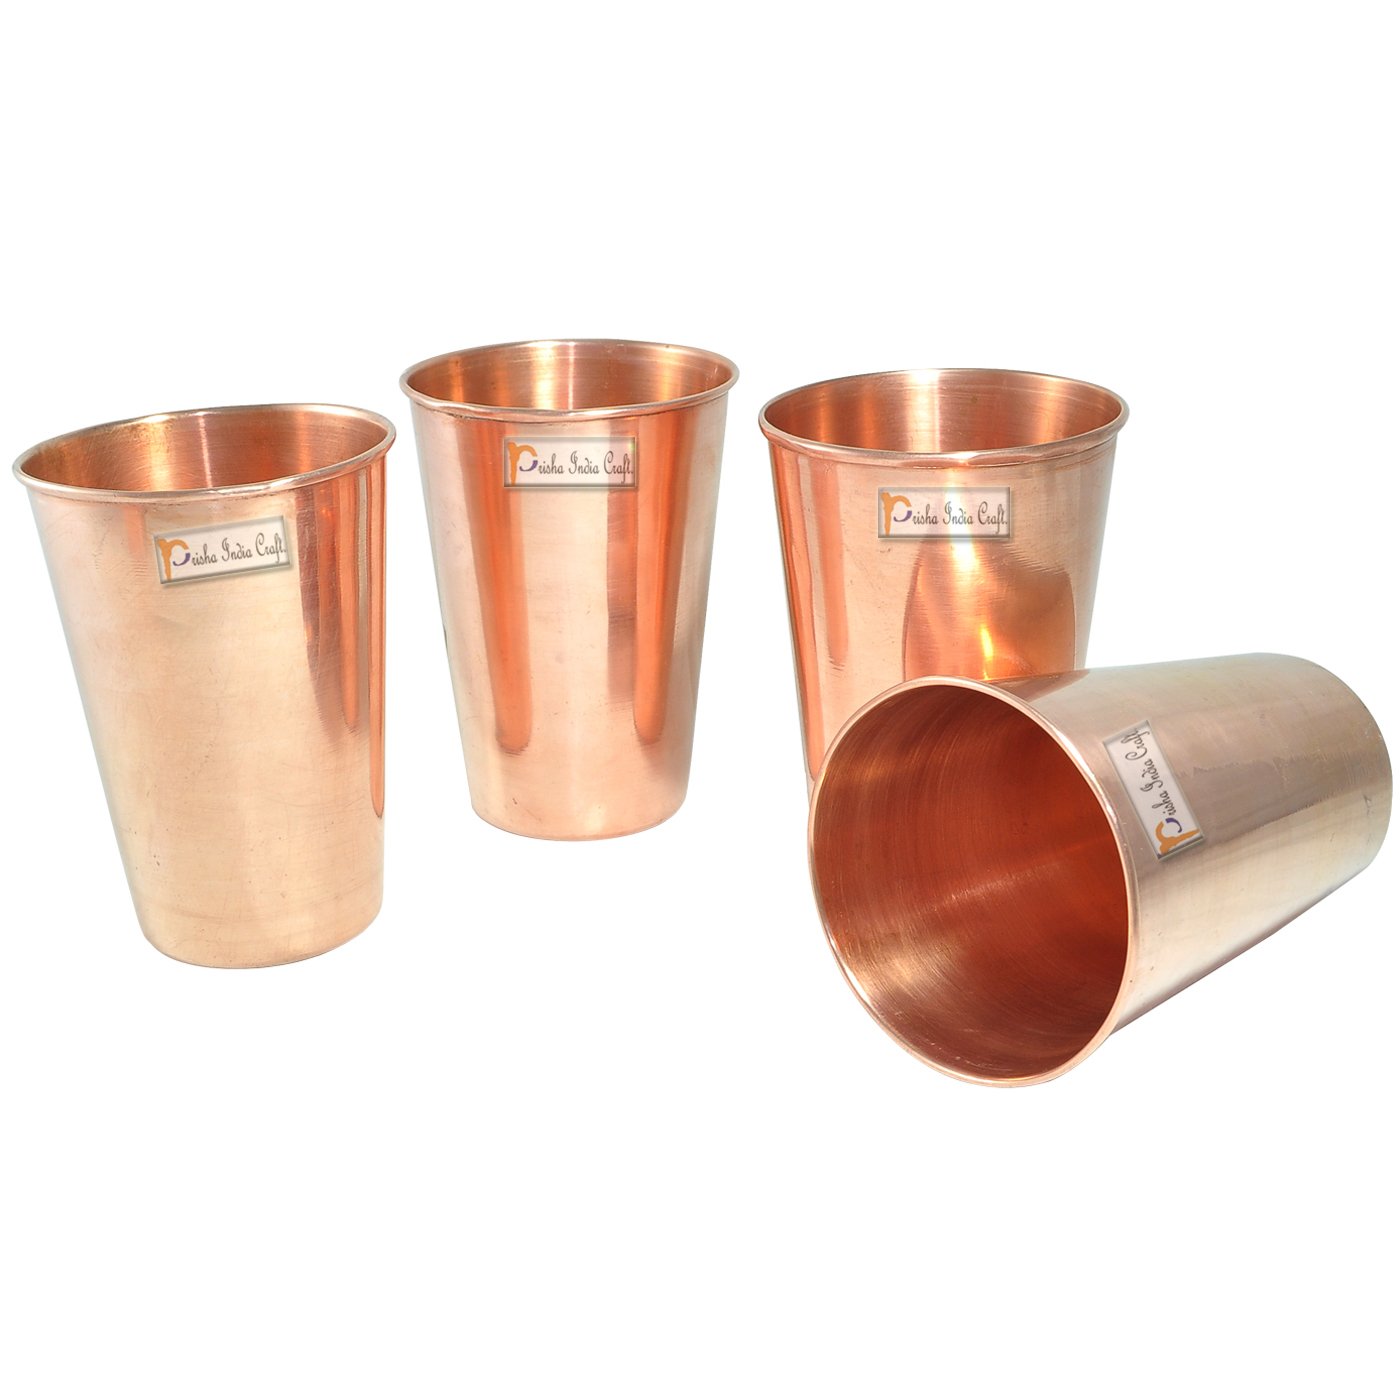 Prisha India Craft Pure Copper Glass Tumbler, Drinkware Set, Capacity 400 ML, Set of 4 Pieces